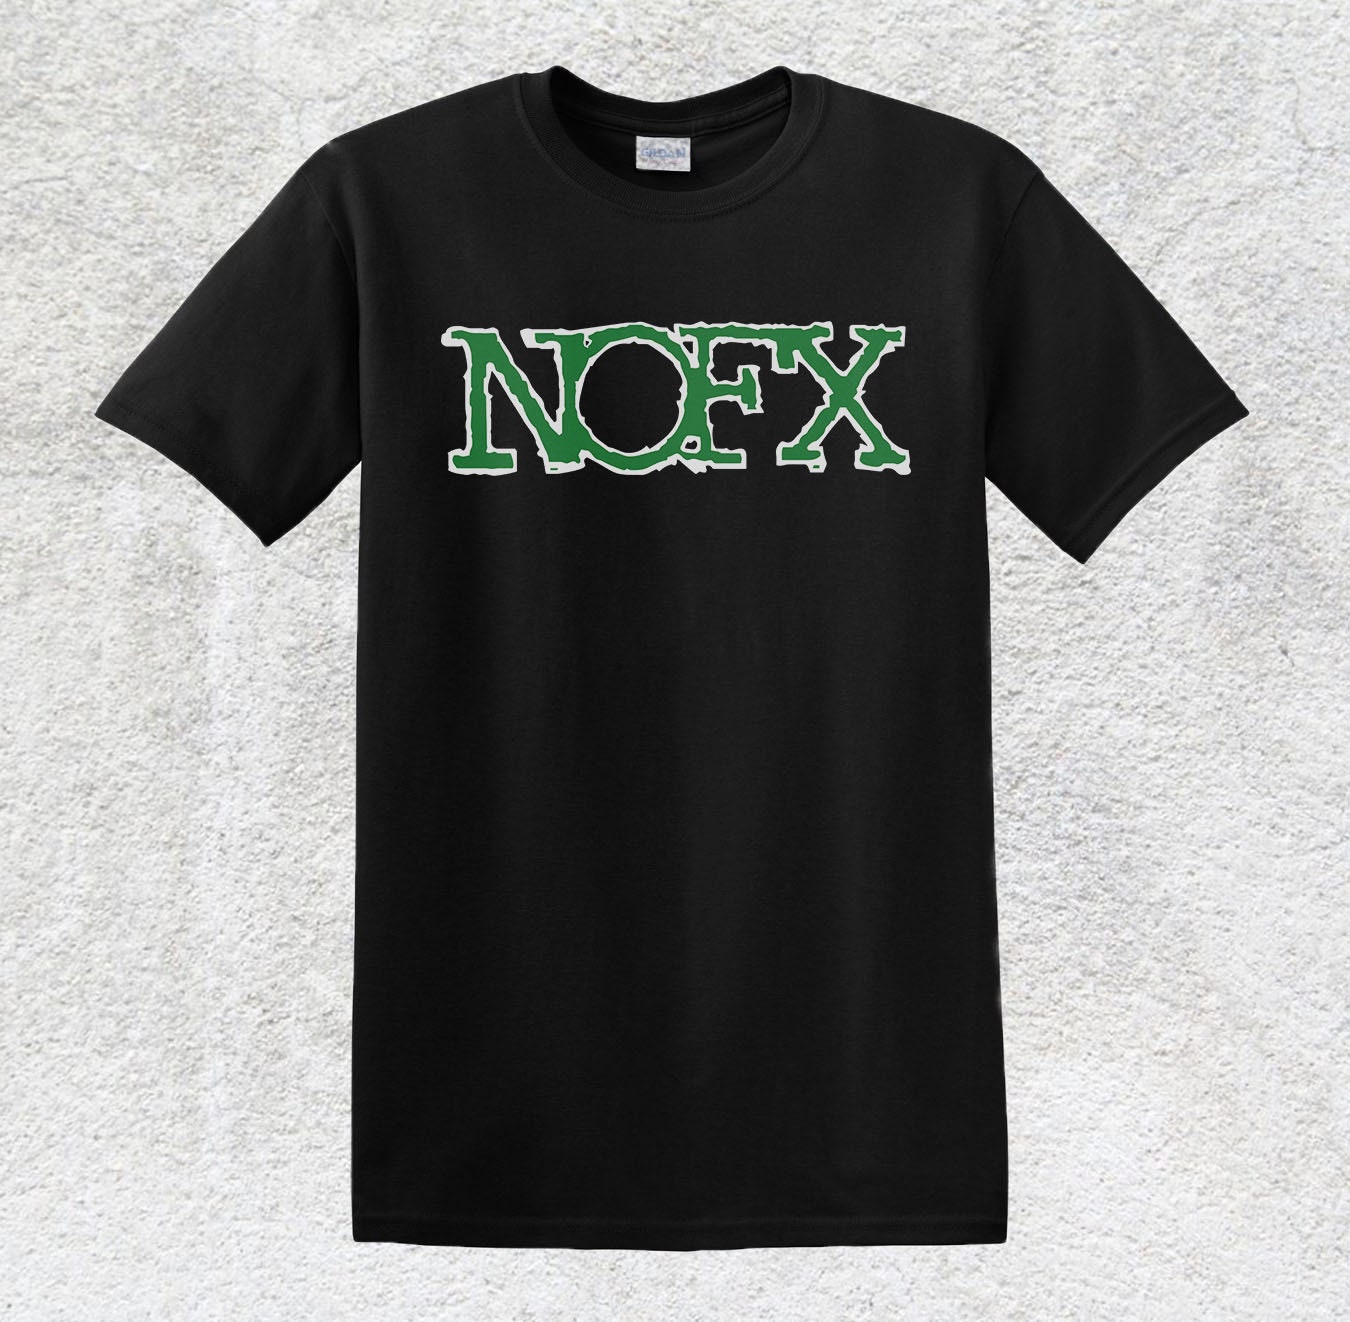 Discover NOFX Band T-Shirt Fat Mike Music Band American Punk Rock Skate Punk Ska Punk T-shirt